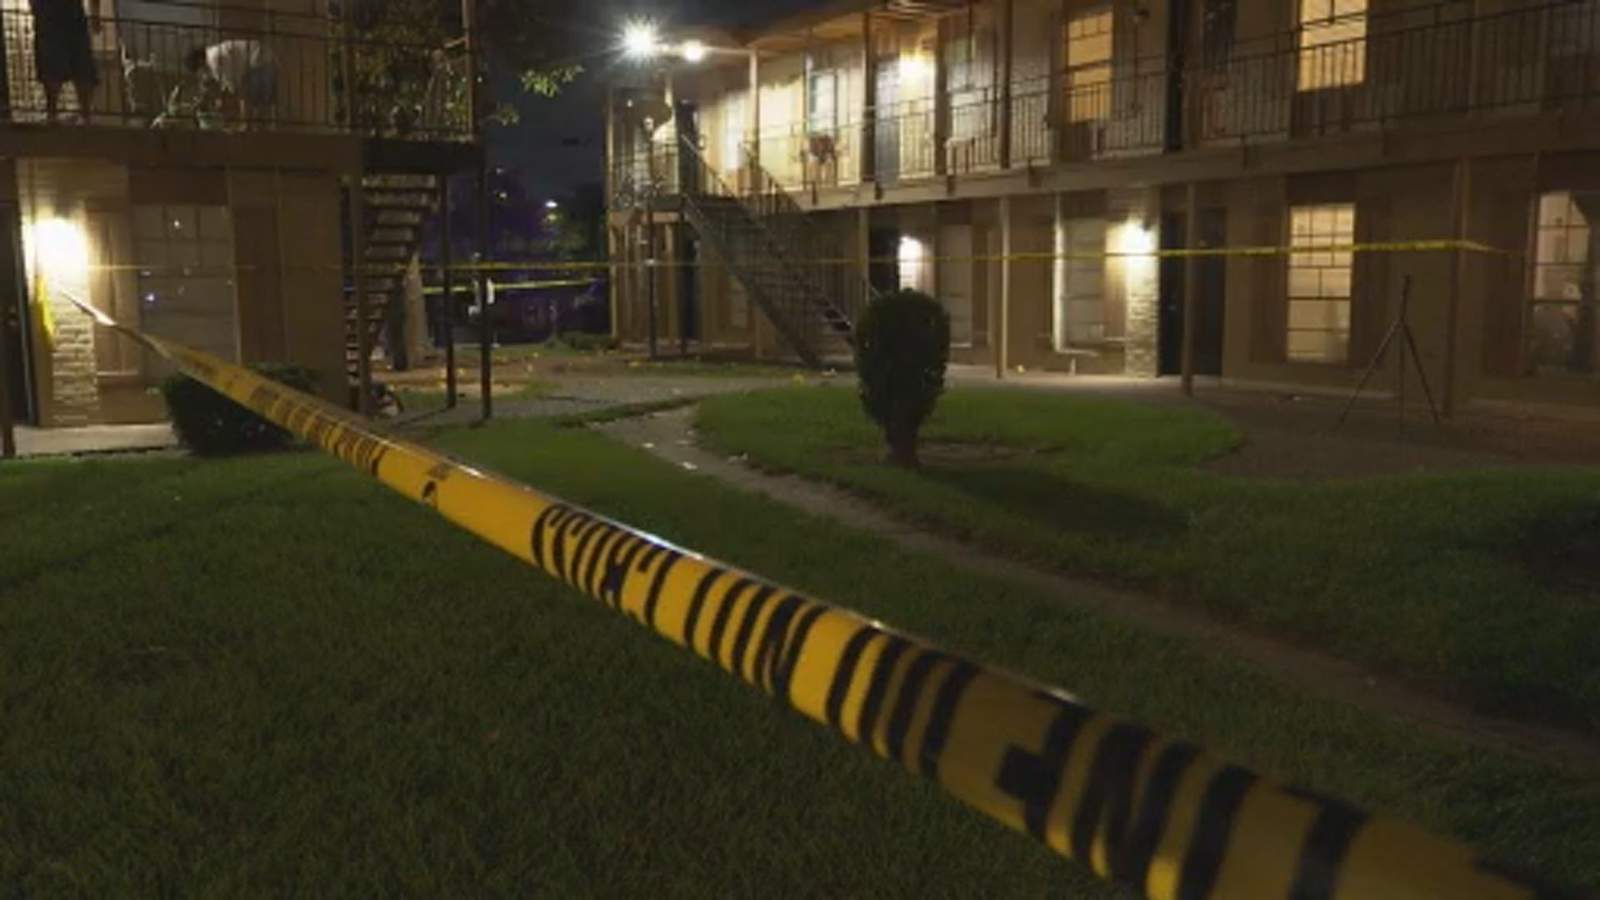 Investigation underway after man found shot to death at SE Houston apartment